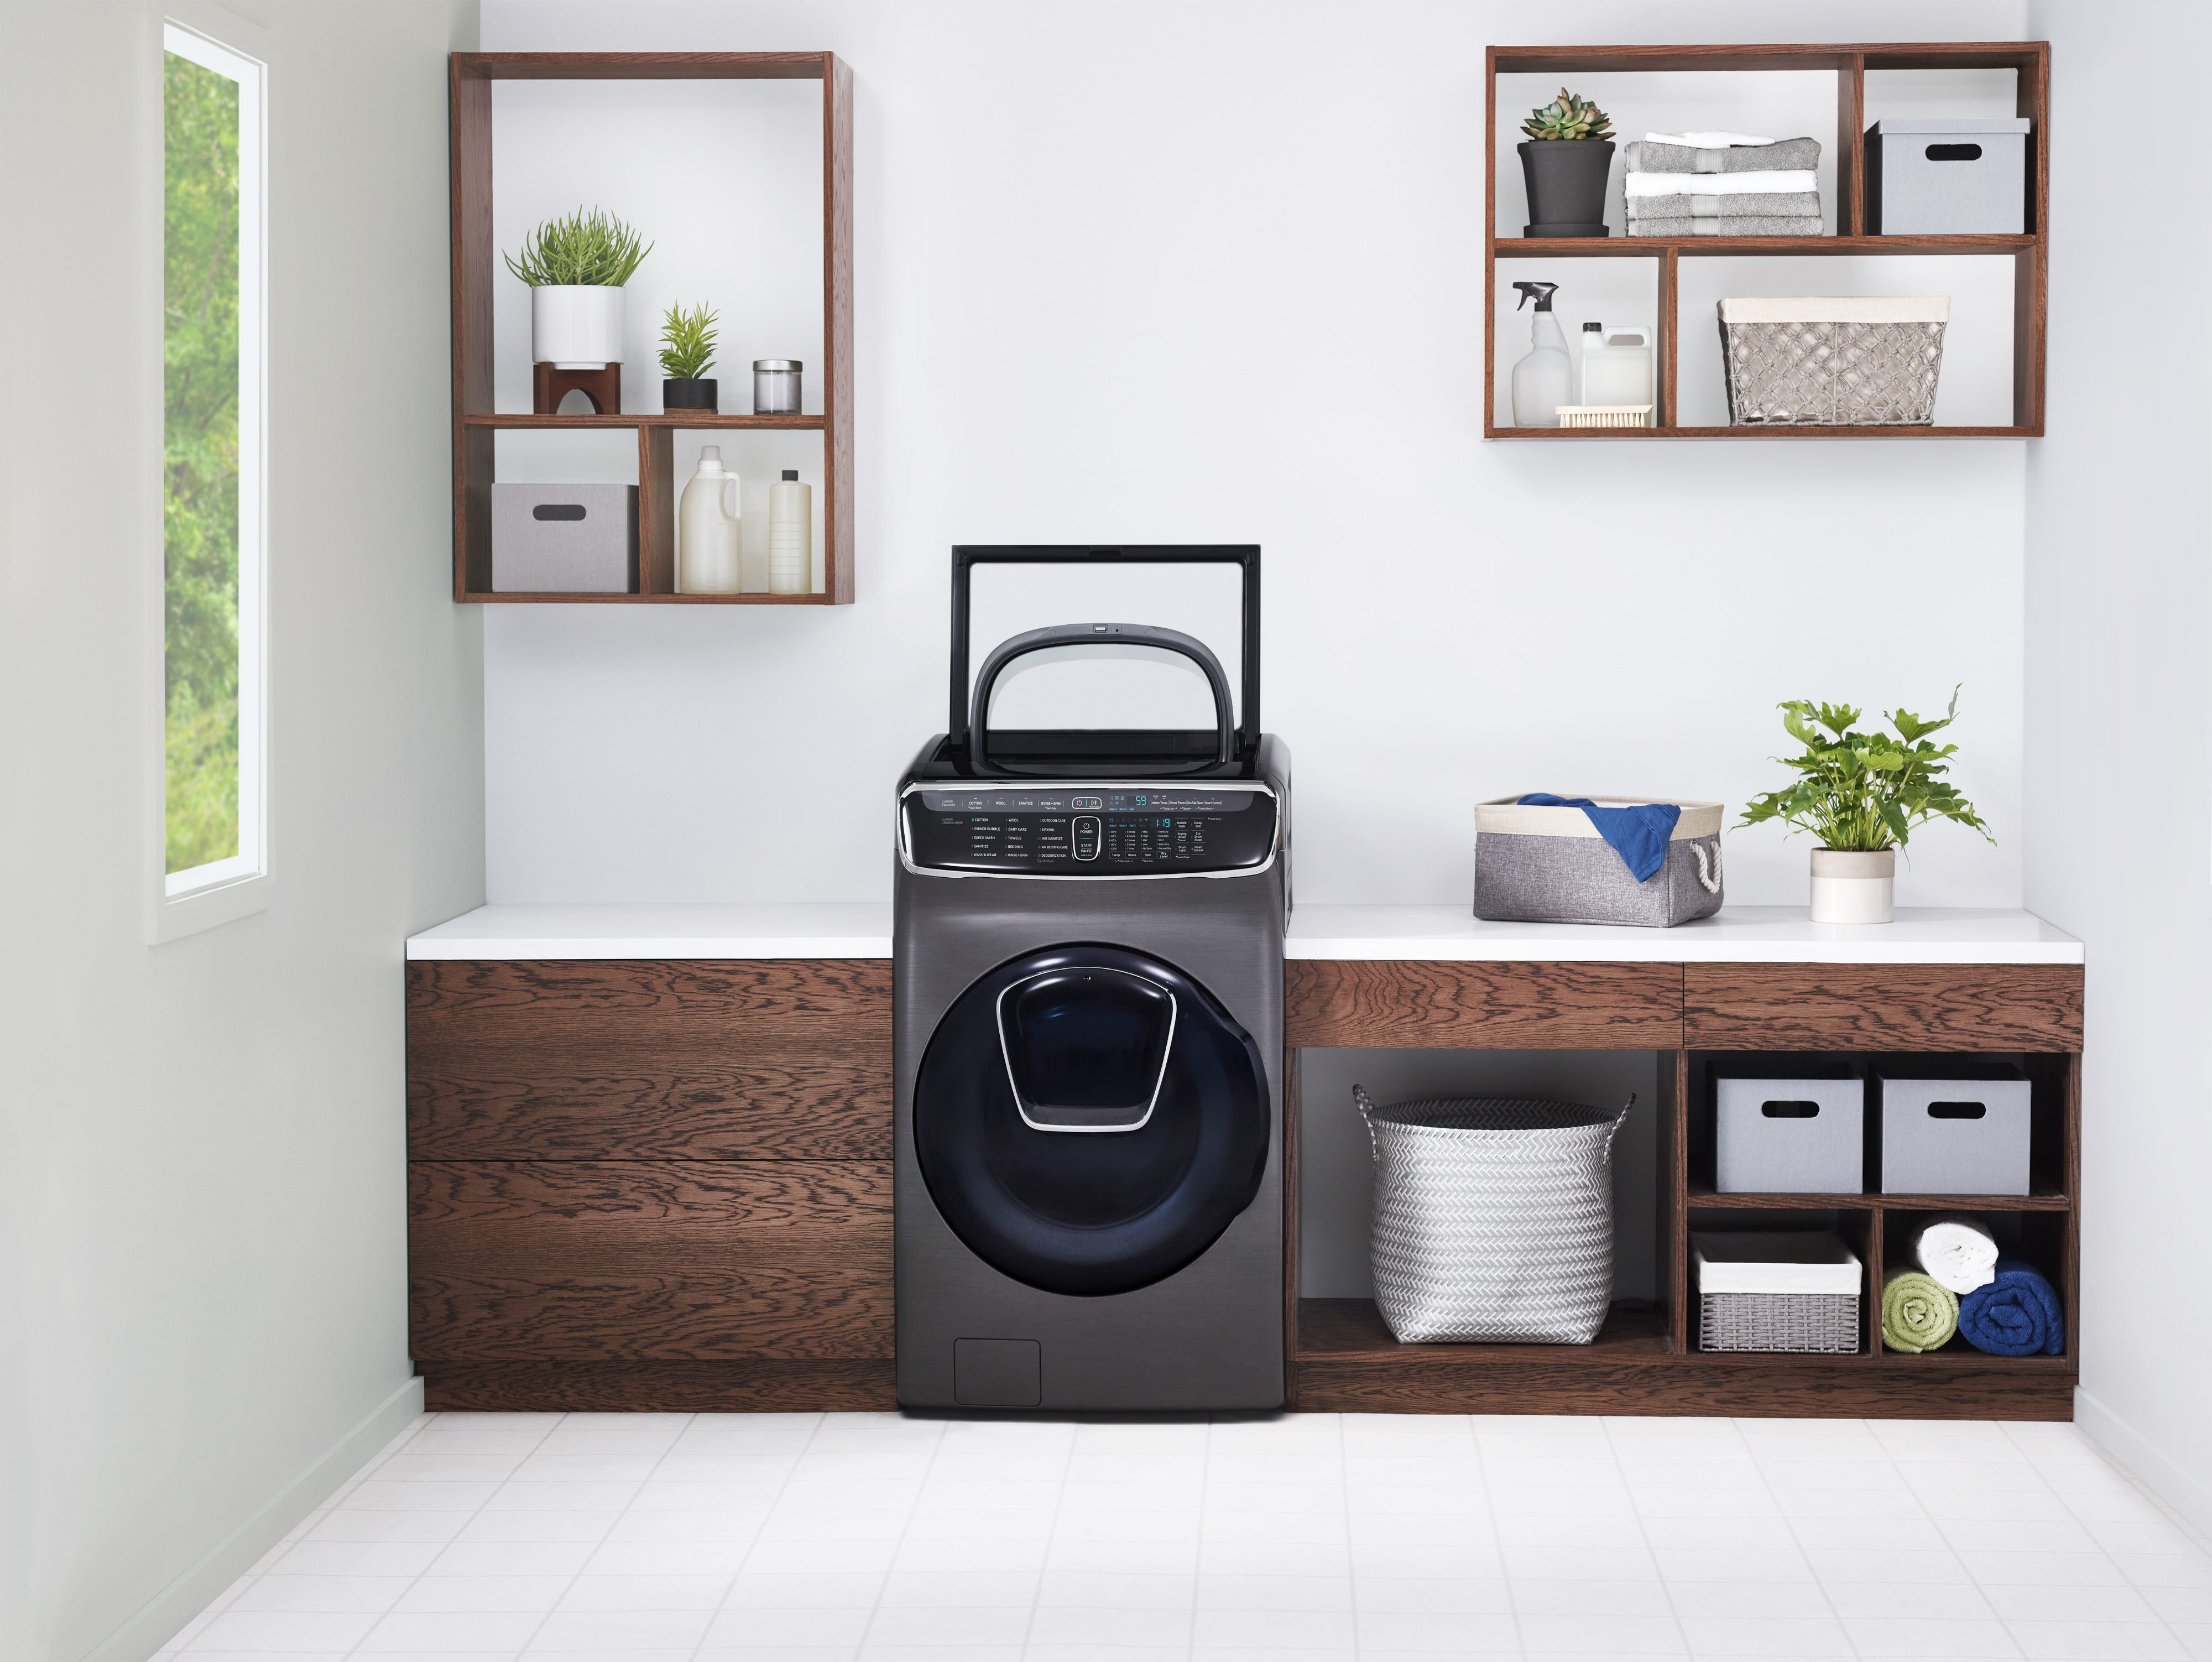 Laundry 1. Samsung Flex Wash стиральная машина. Стиральная машина в интерьере. Черная стиральная машина в интерьере. Стиральная машина в современном интерьере.